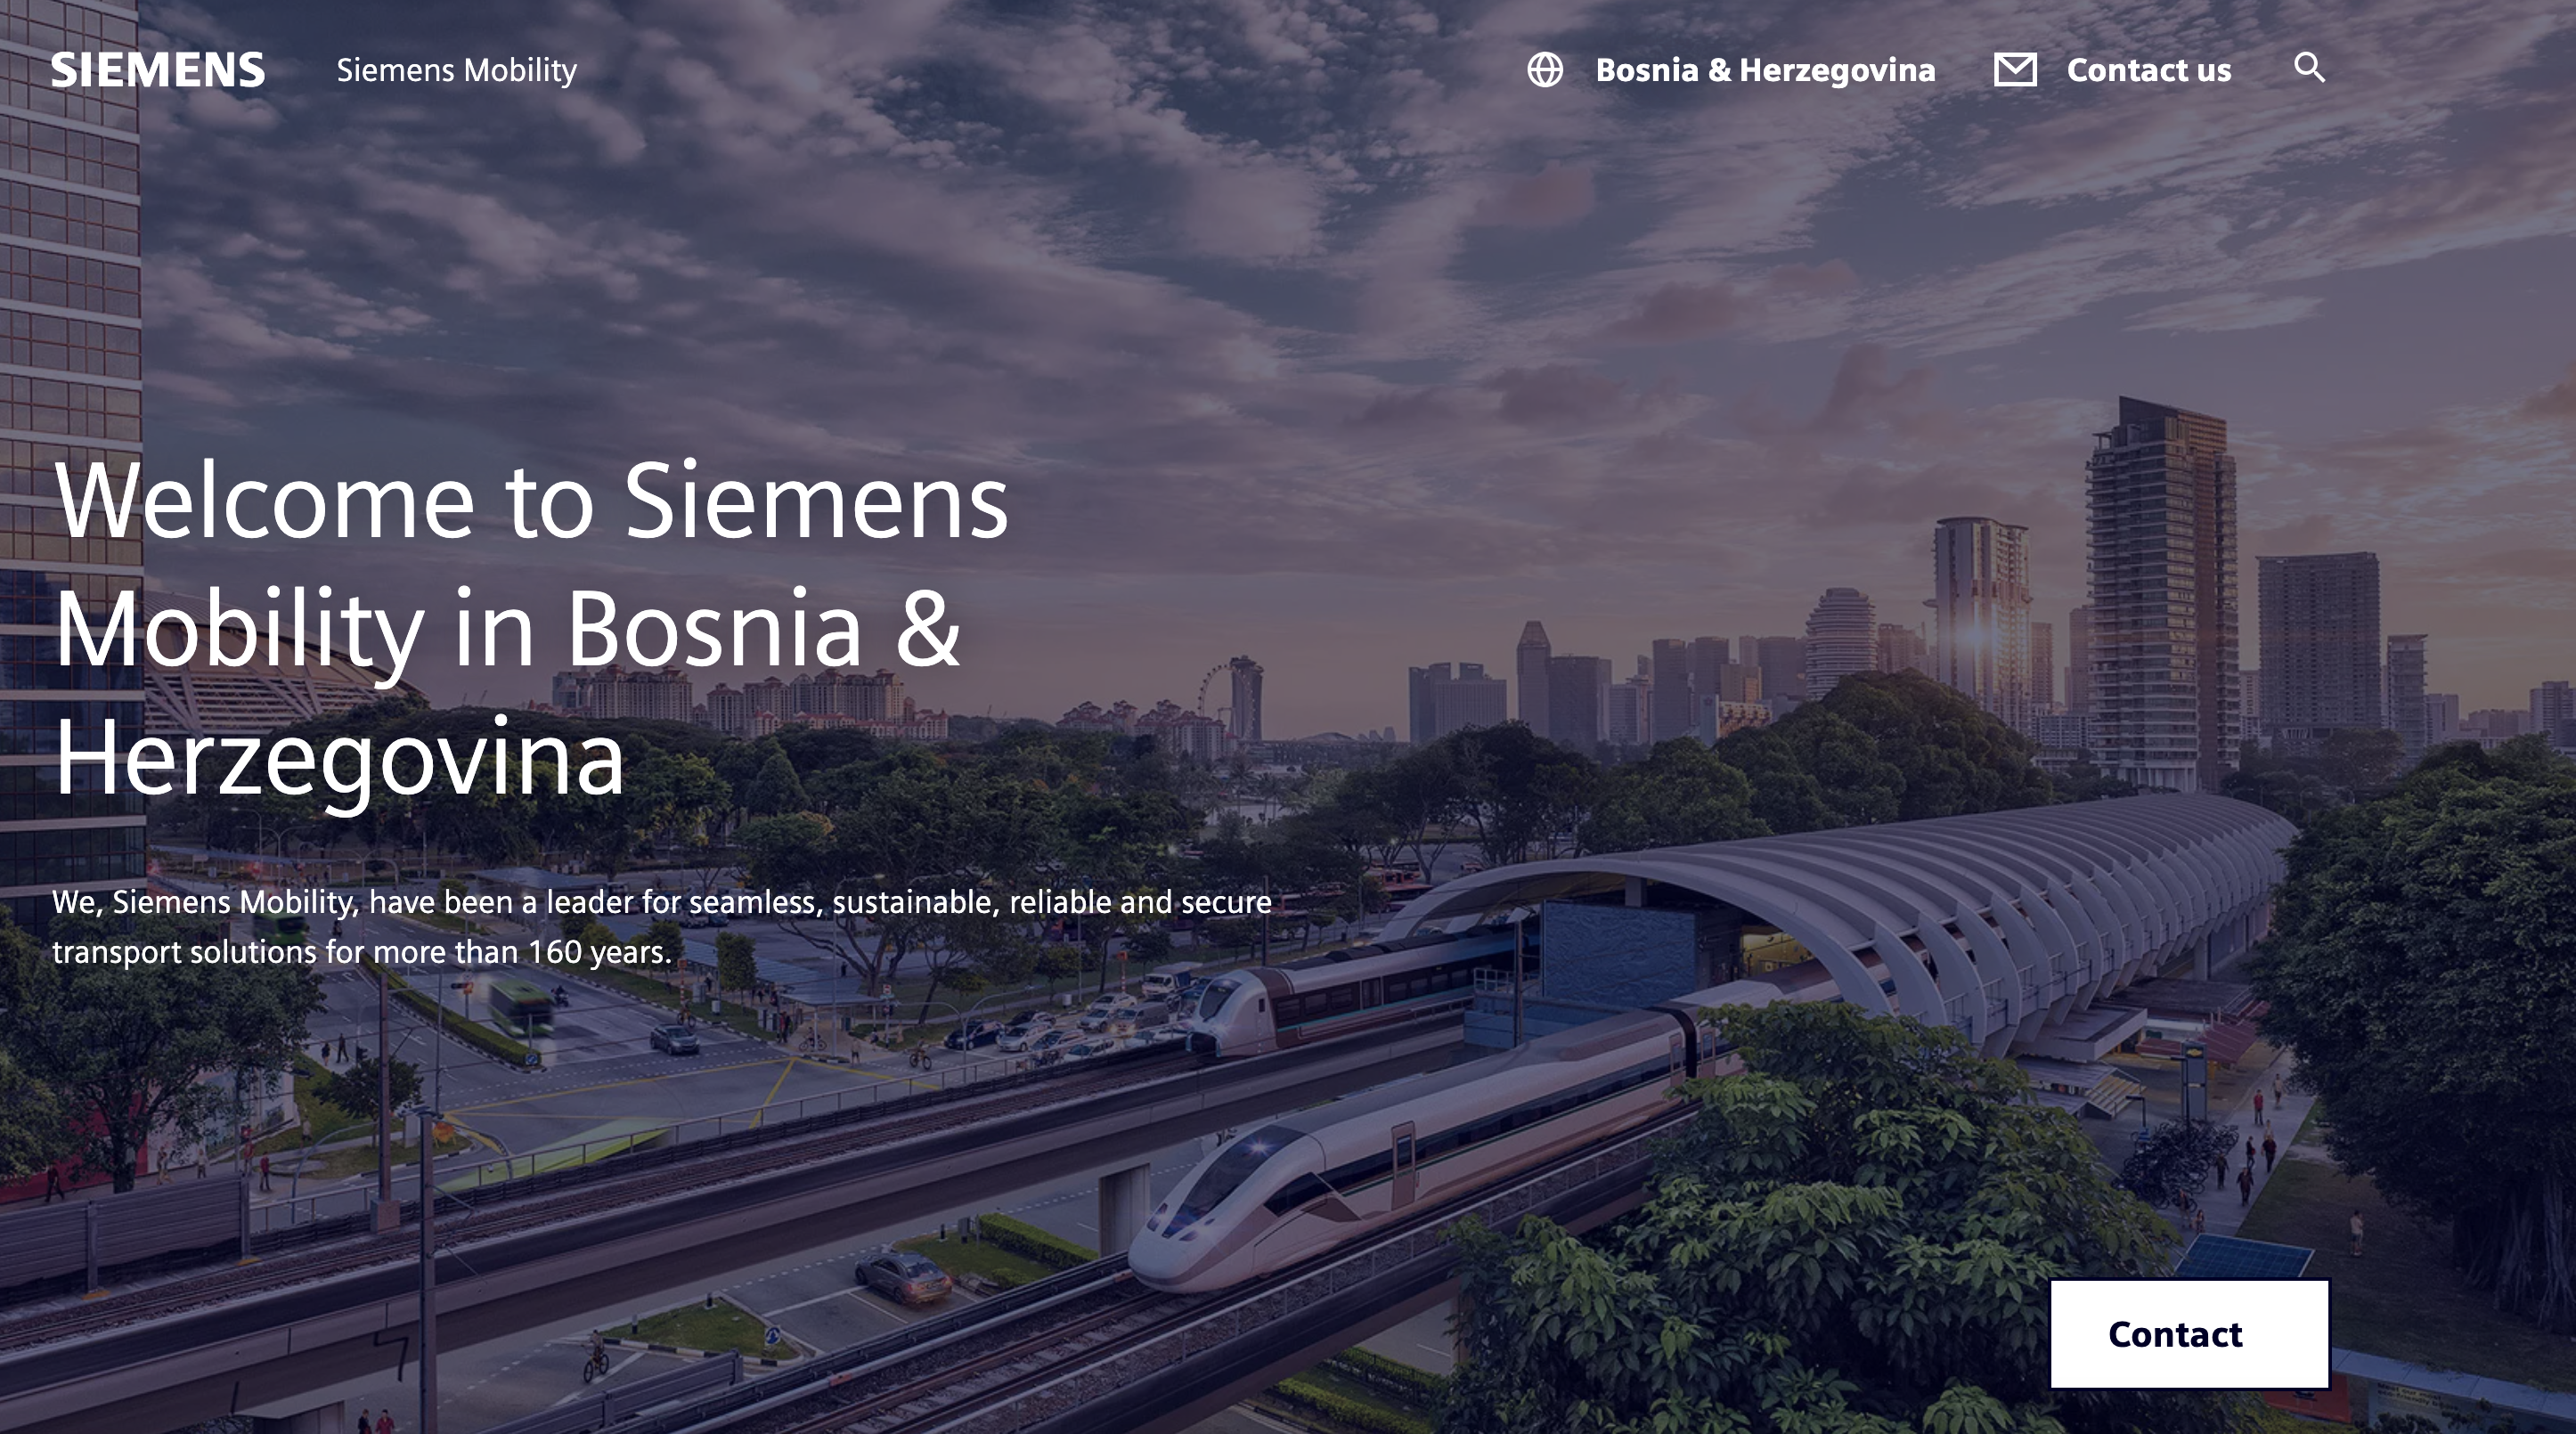 Web portal application for Siemens